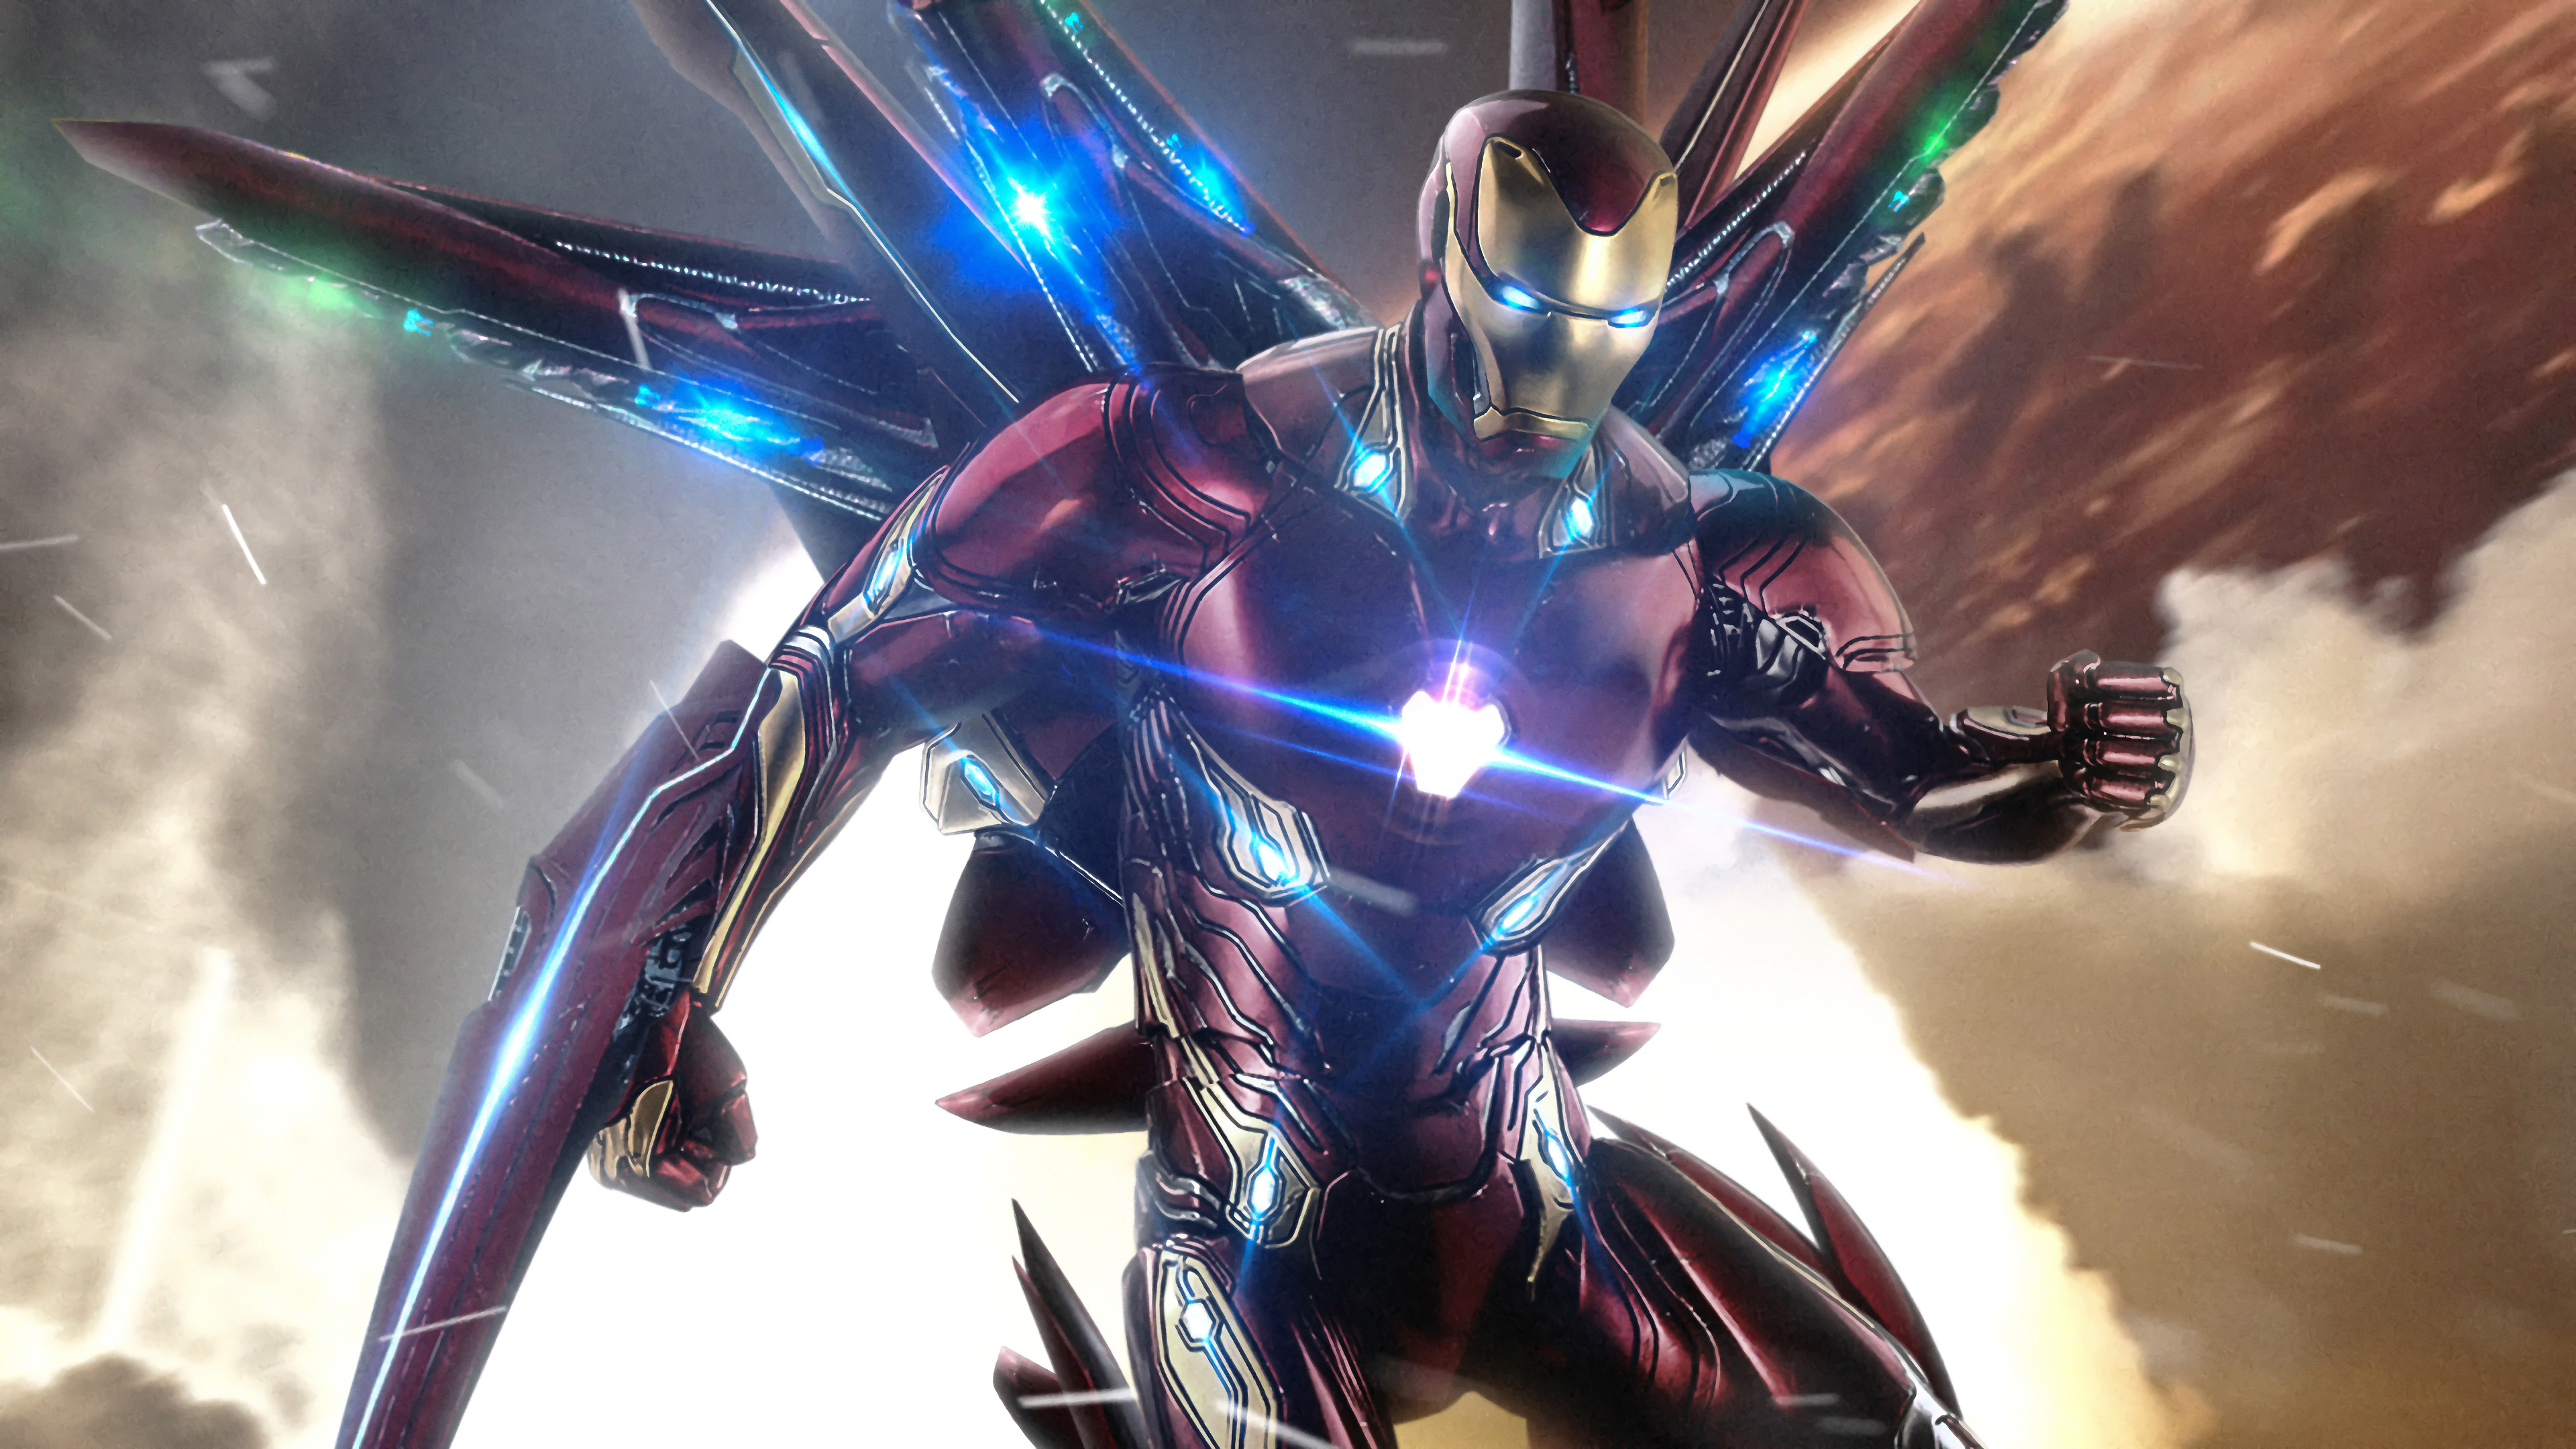 Iron Man Avengers Endgame 4k